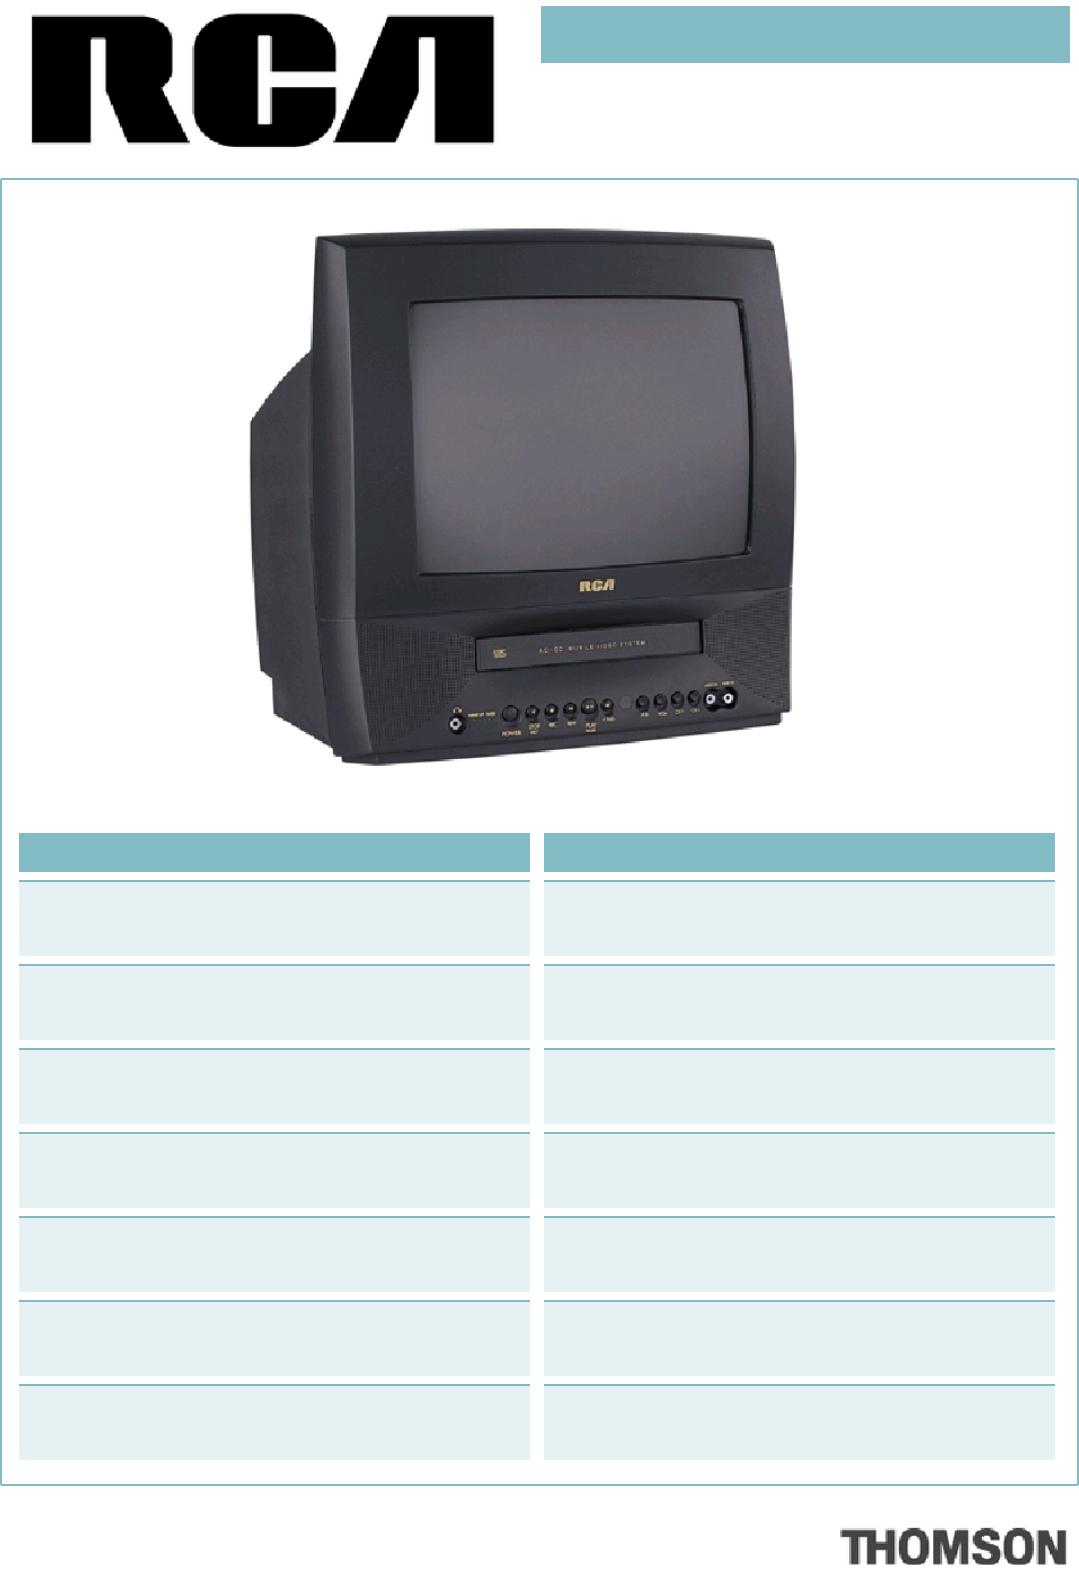 Thomson digital tv recorder manual